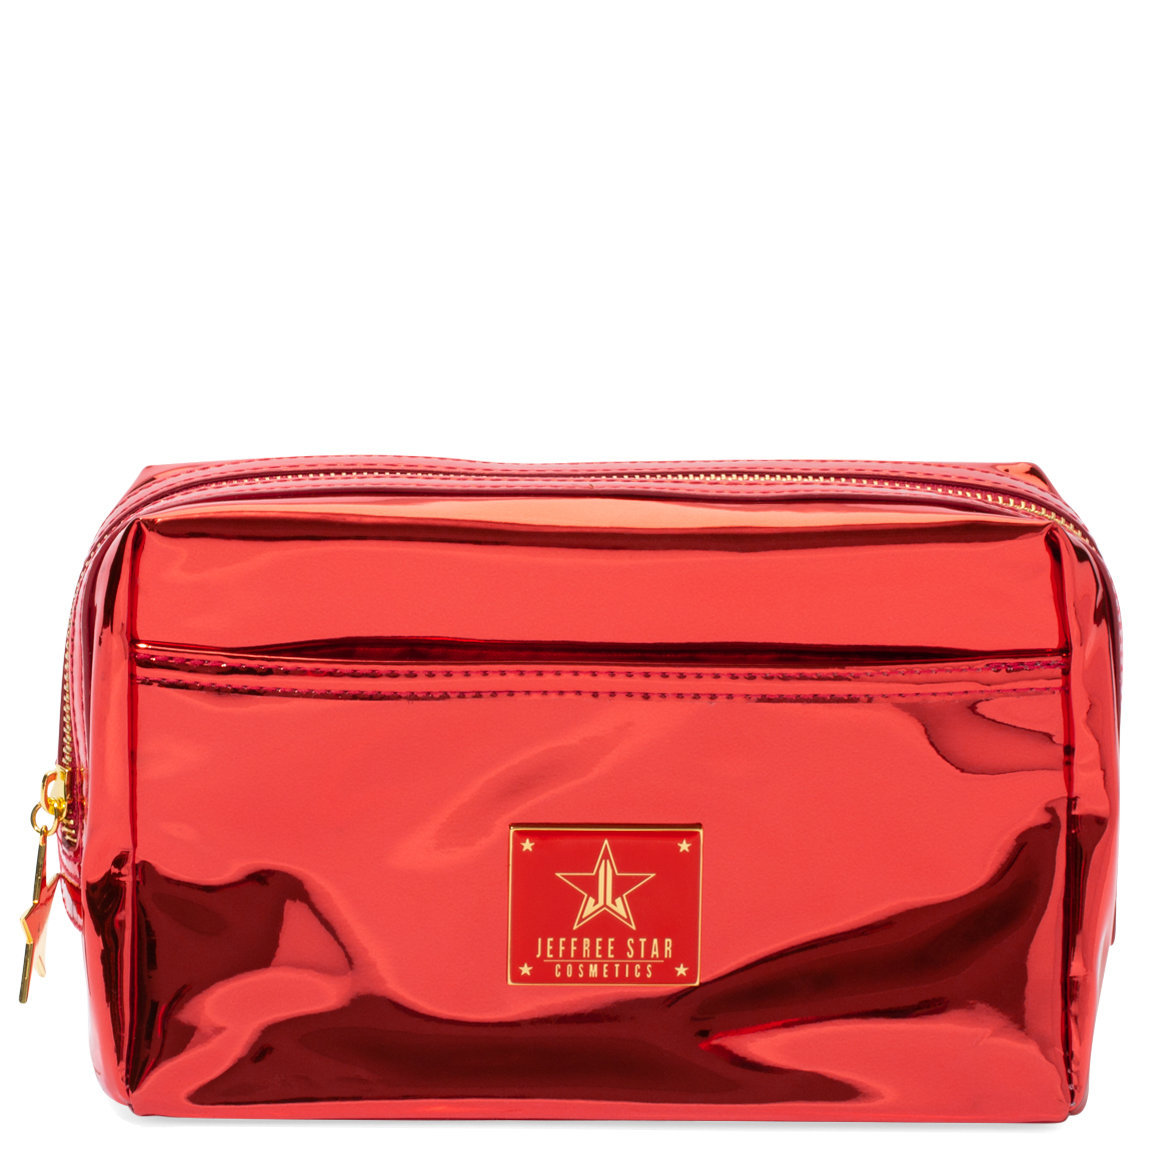 Jeffree Star Cosmetics Reflective Makeup Bag Red | Beautylish